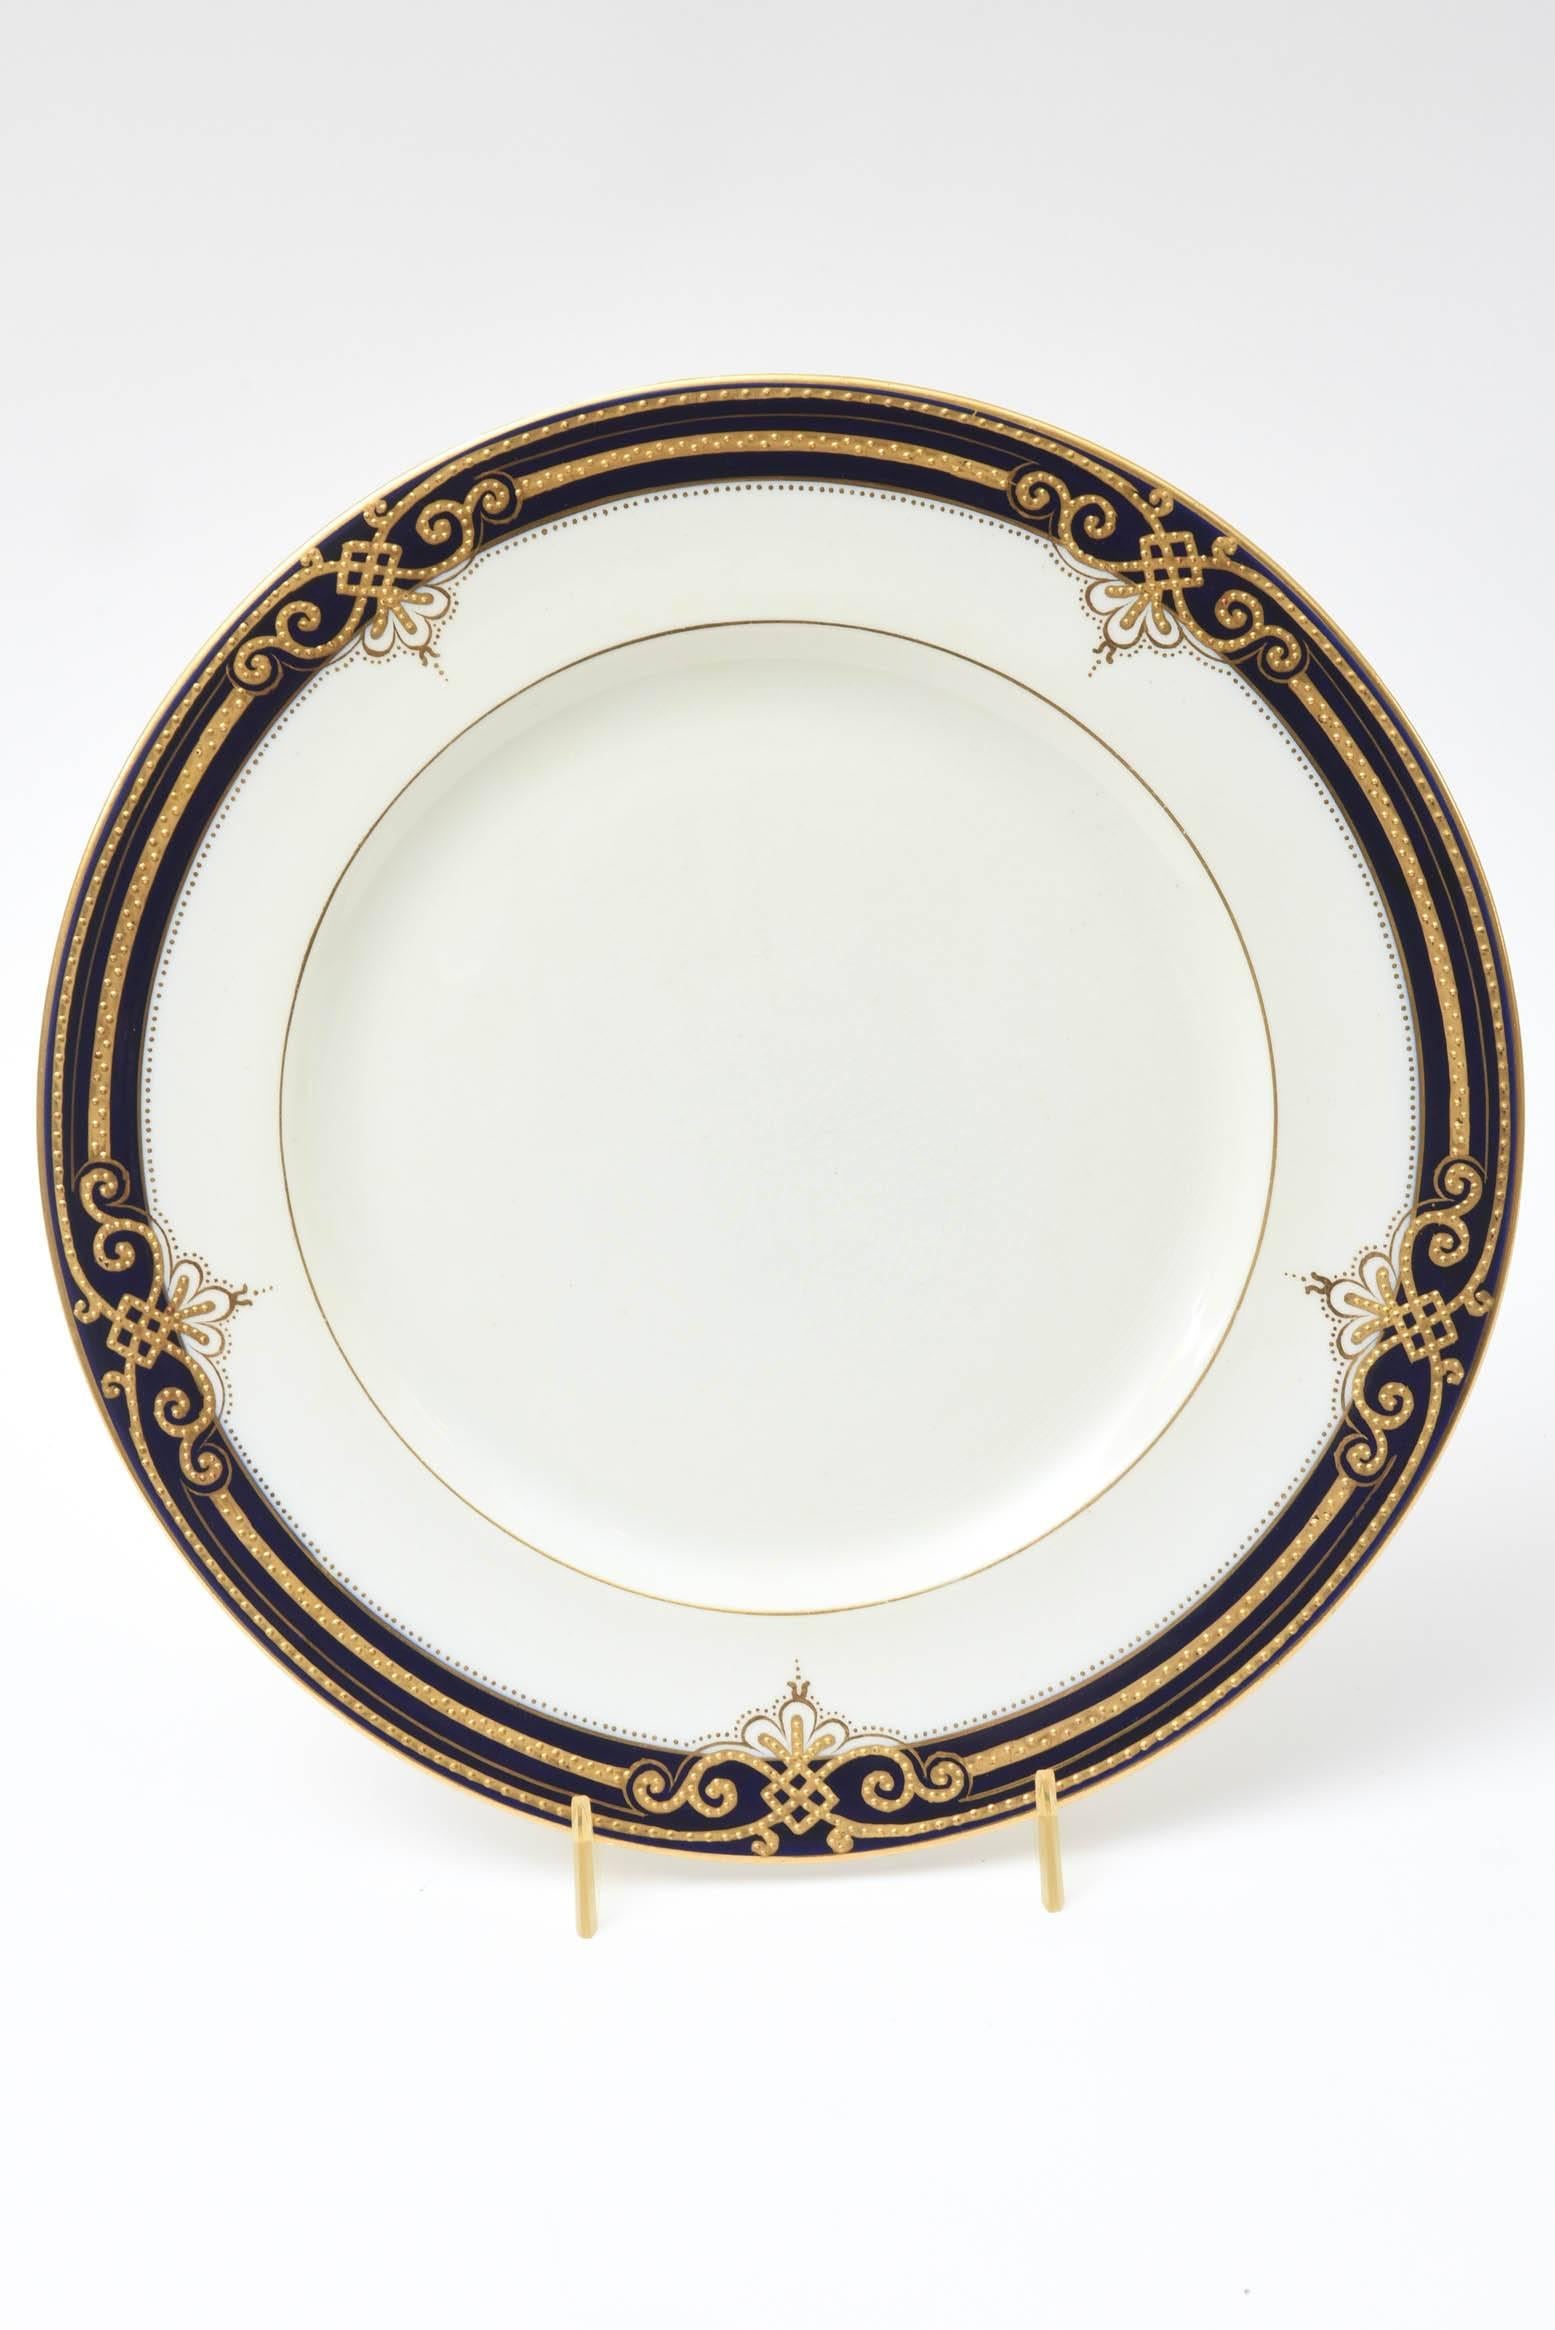 12 Elegant Cobalt Blue and Raised Tooled Gilt Dinner Plates, Antique English 4